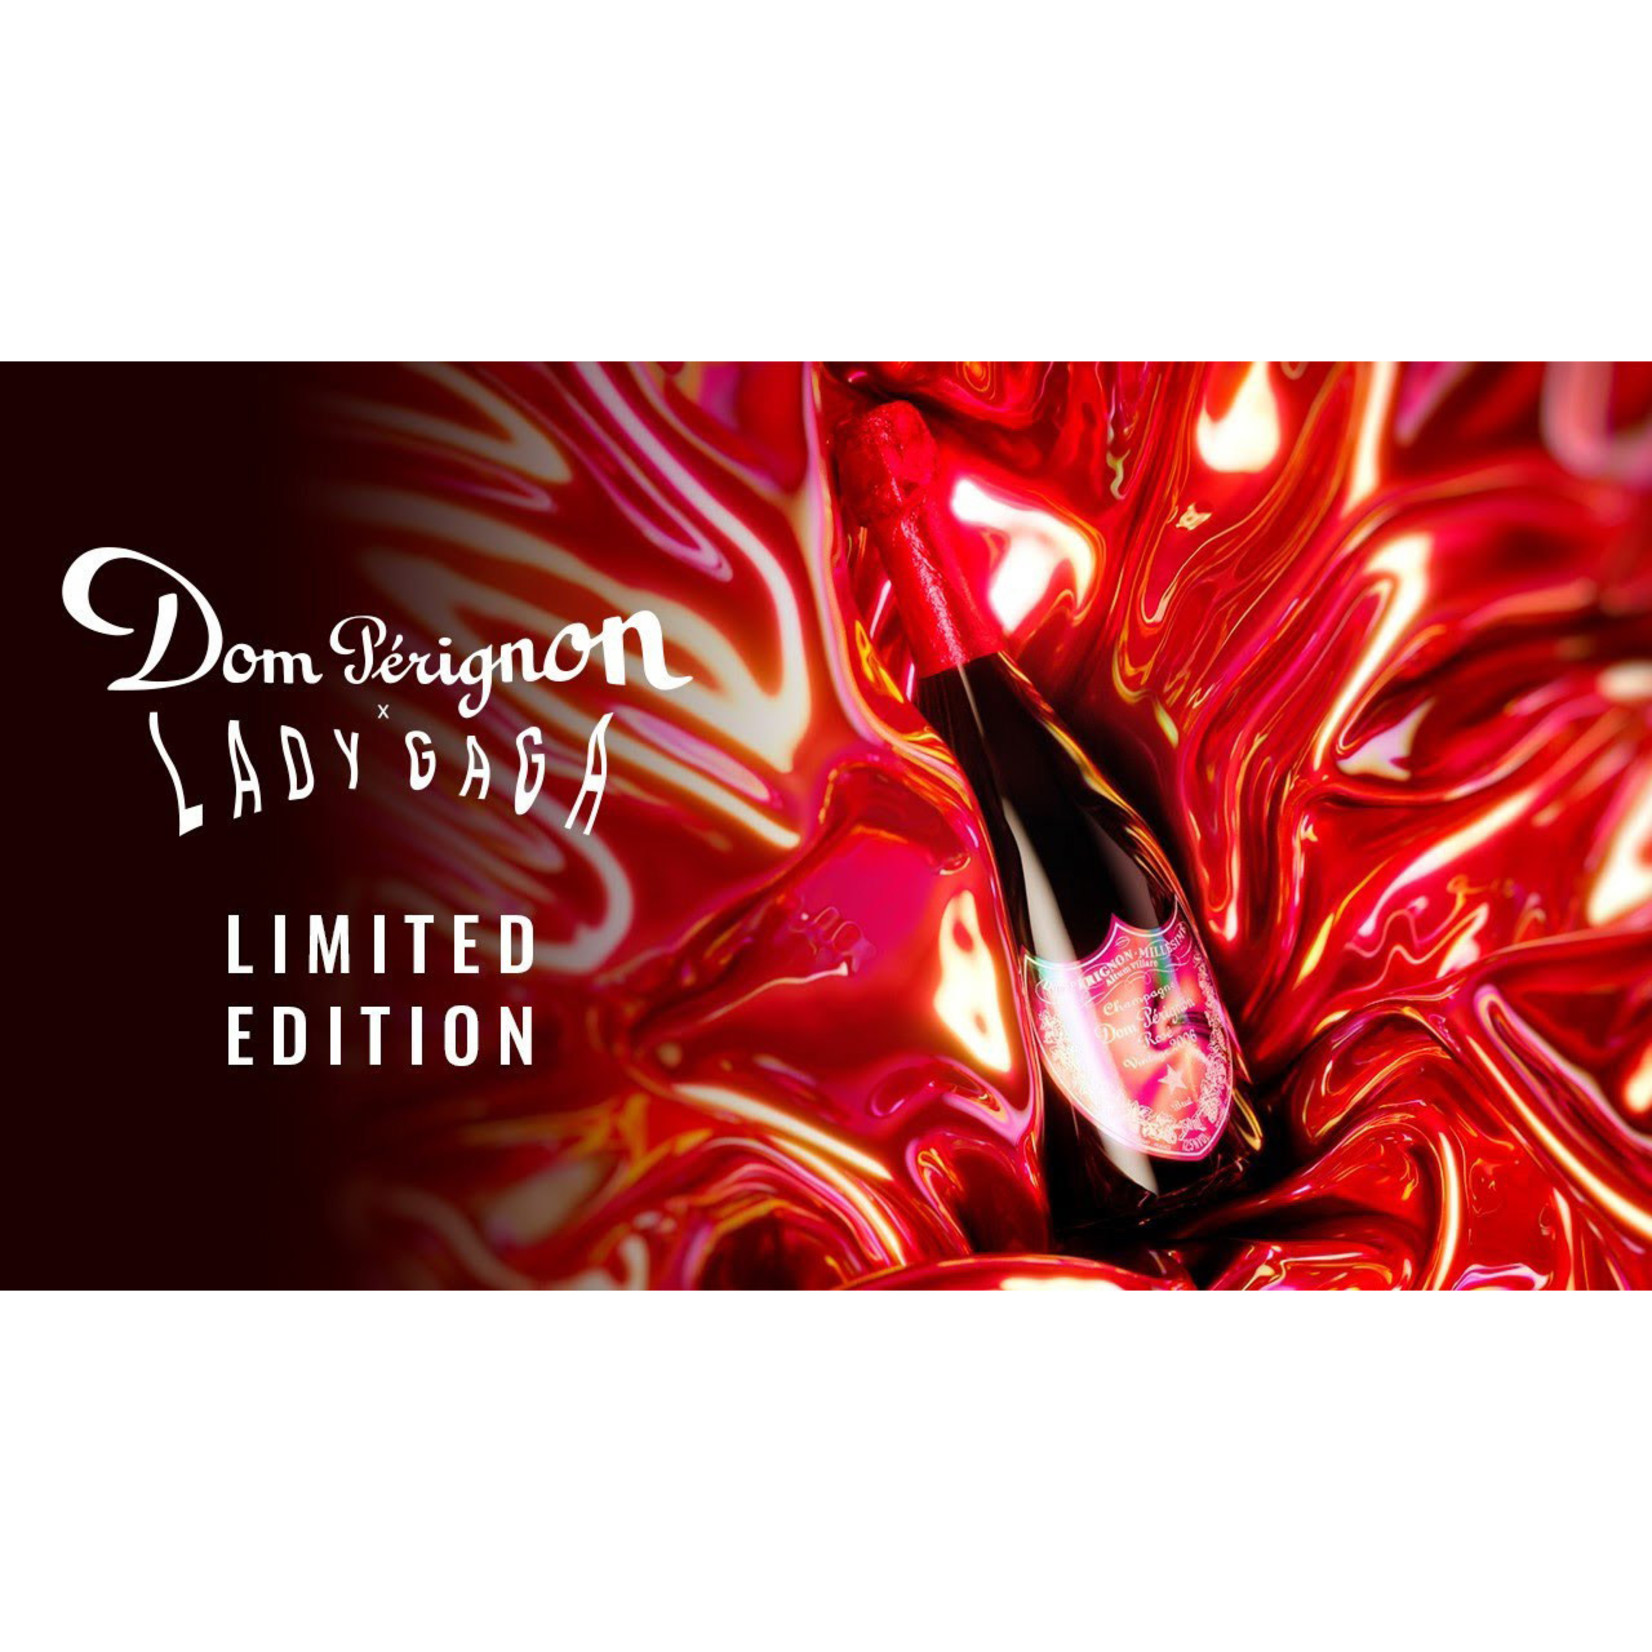 Dom Perignon Brut Rose x Lady Gaga Limited Edition Champagne - New Westlane  Wines & Liquors, New York, NY, New York, NY